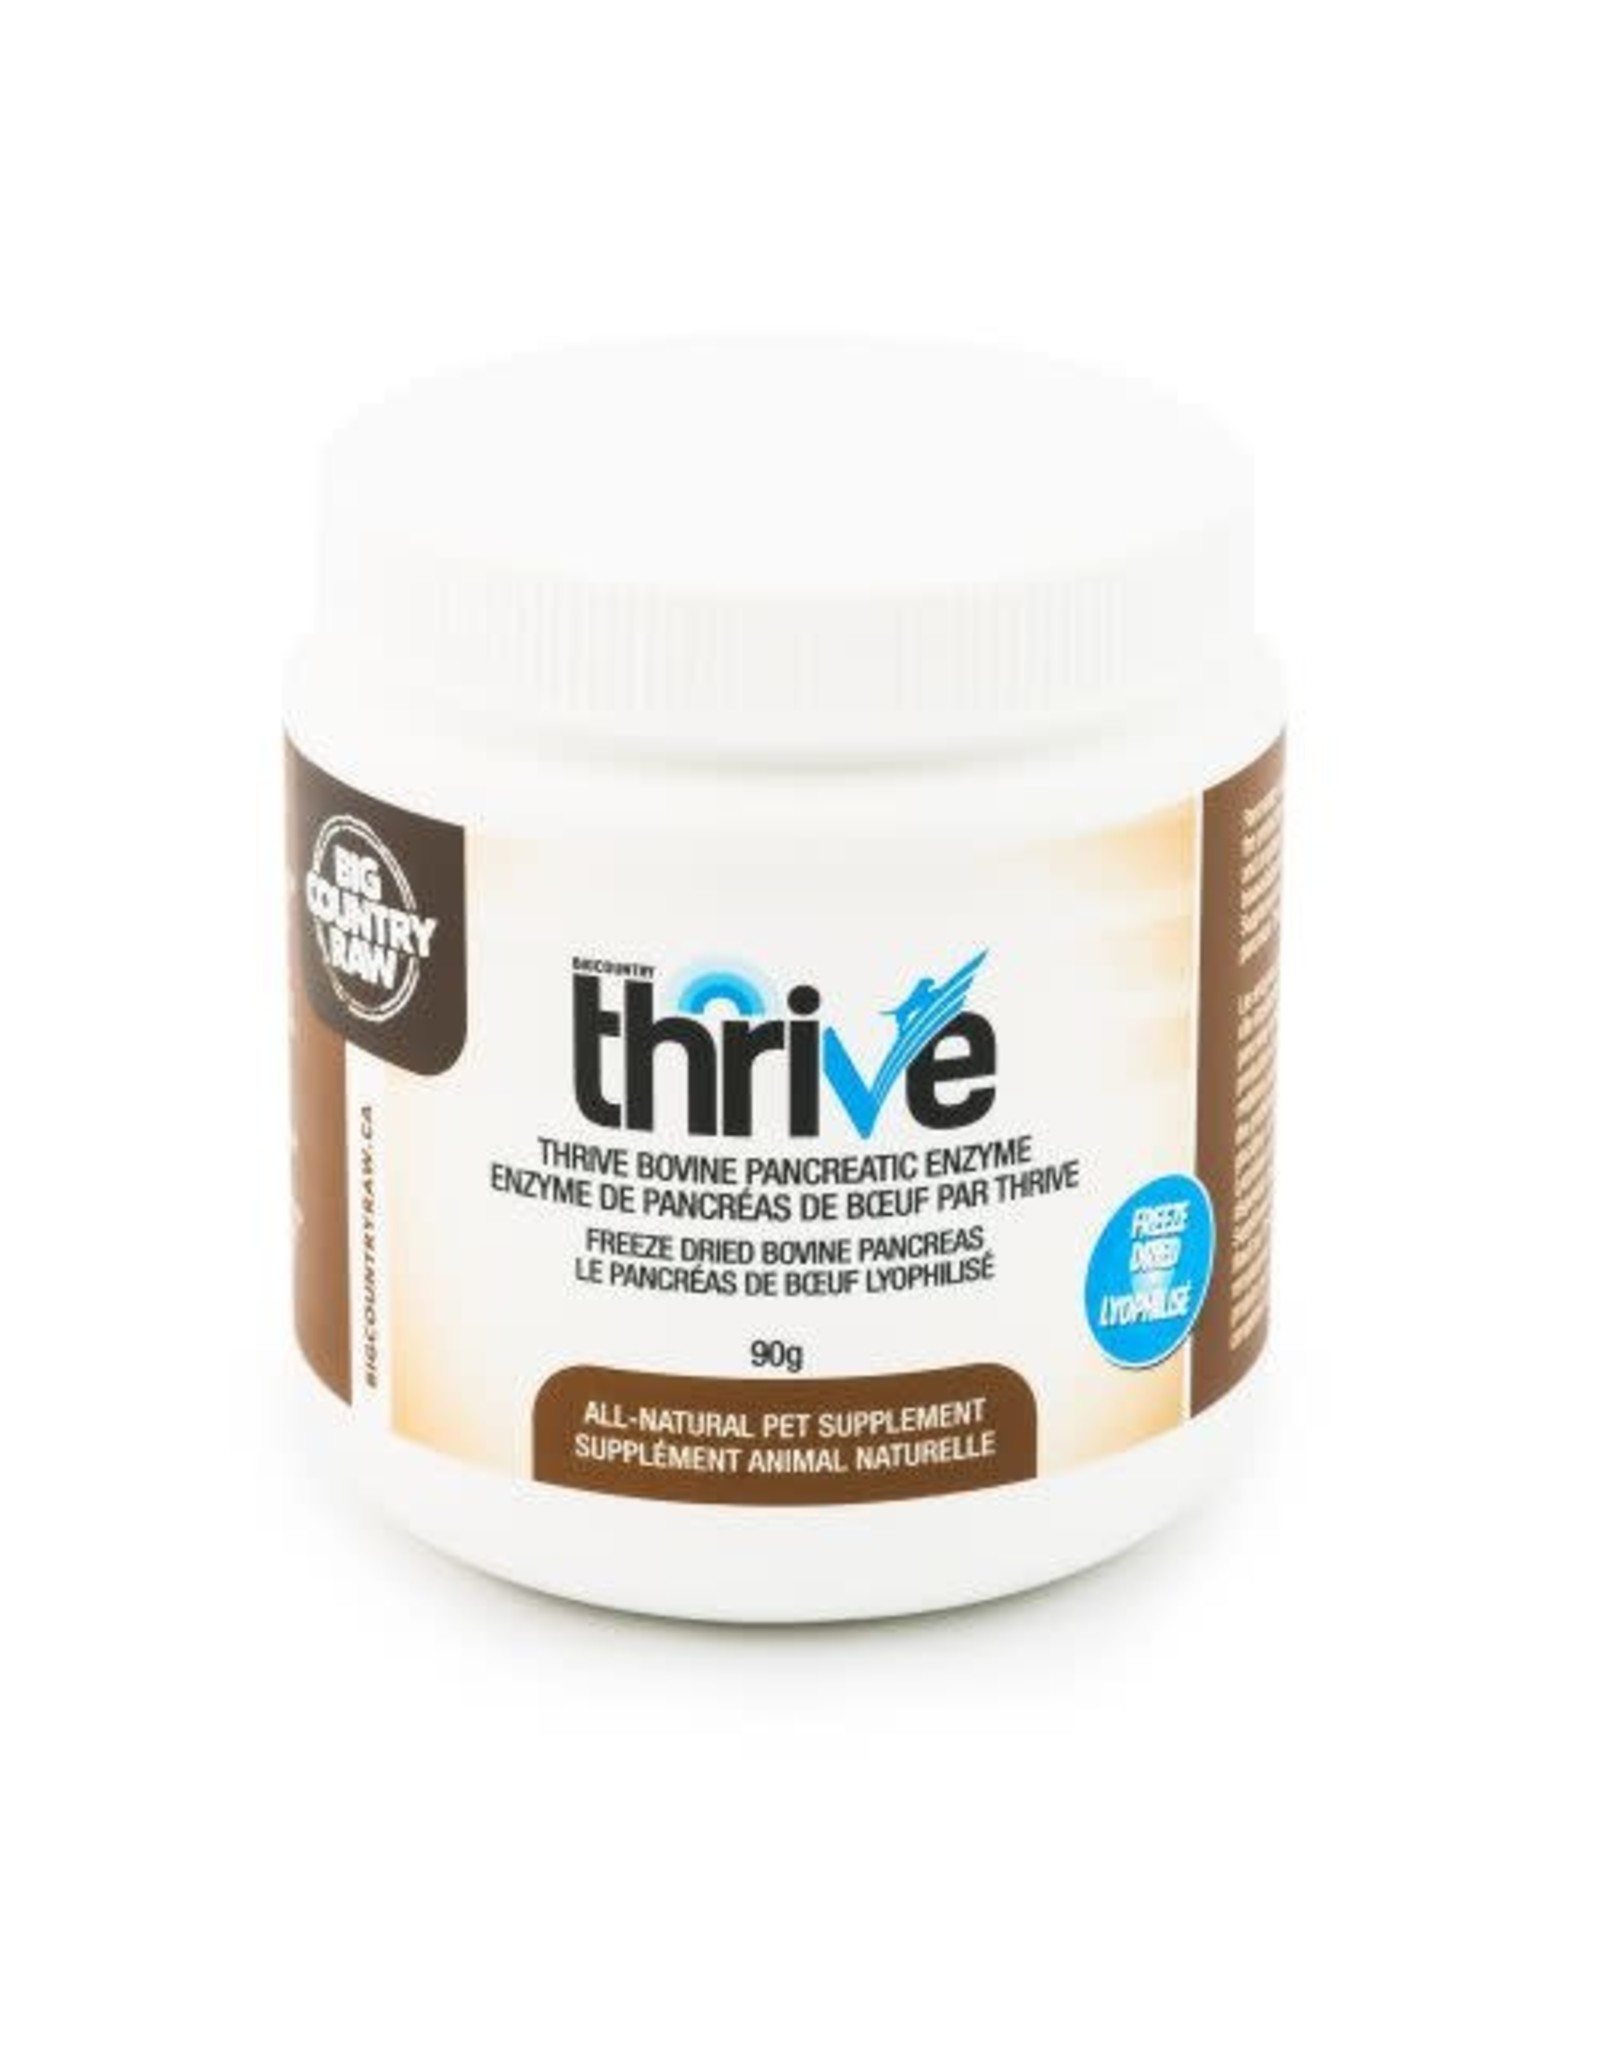 Thrive Bovine Pancreatic Enzyme - 90g